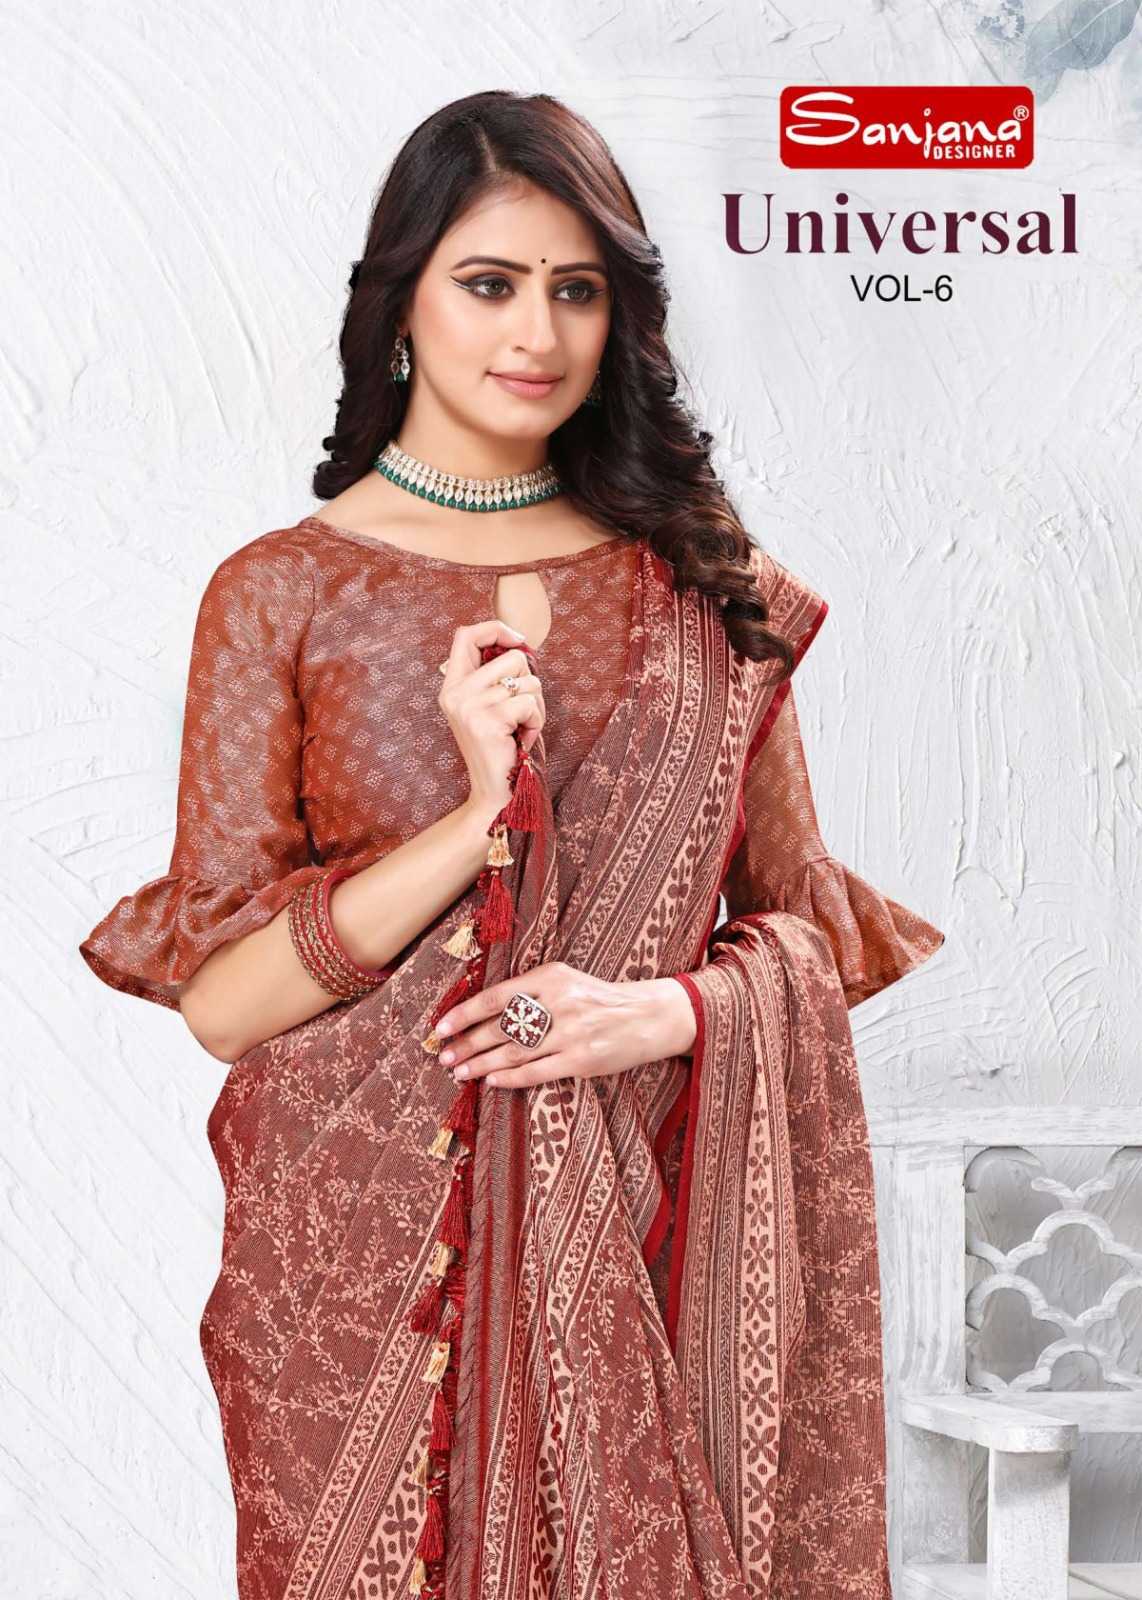 universal vol 6 by sanjana designer amazing brasso sarees